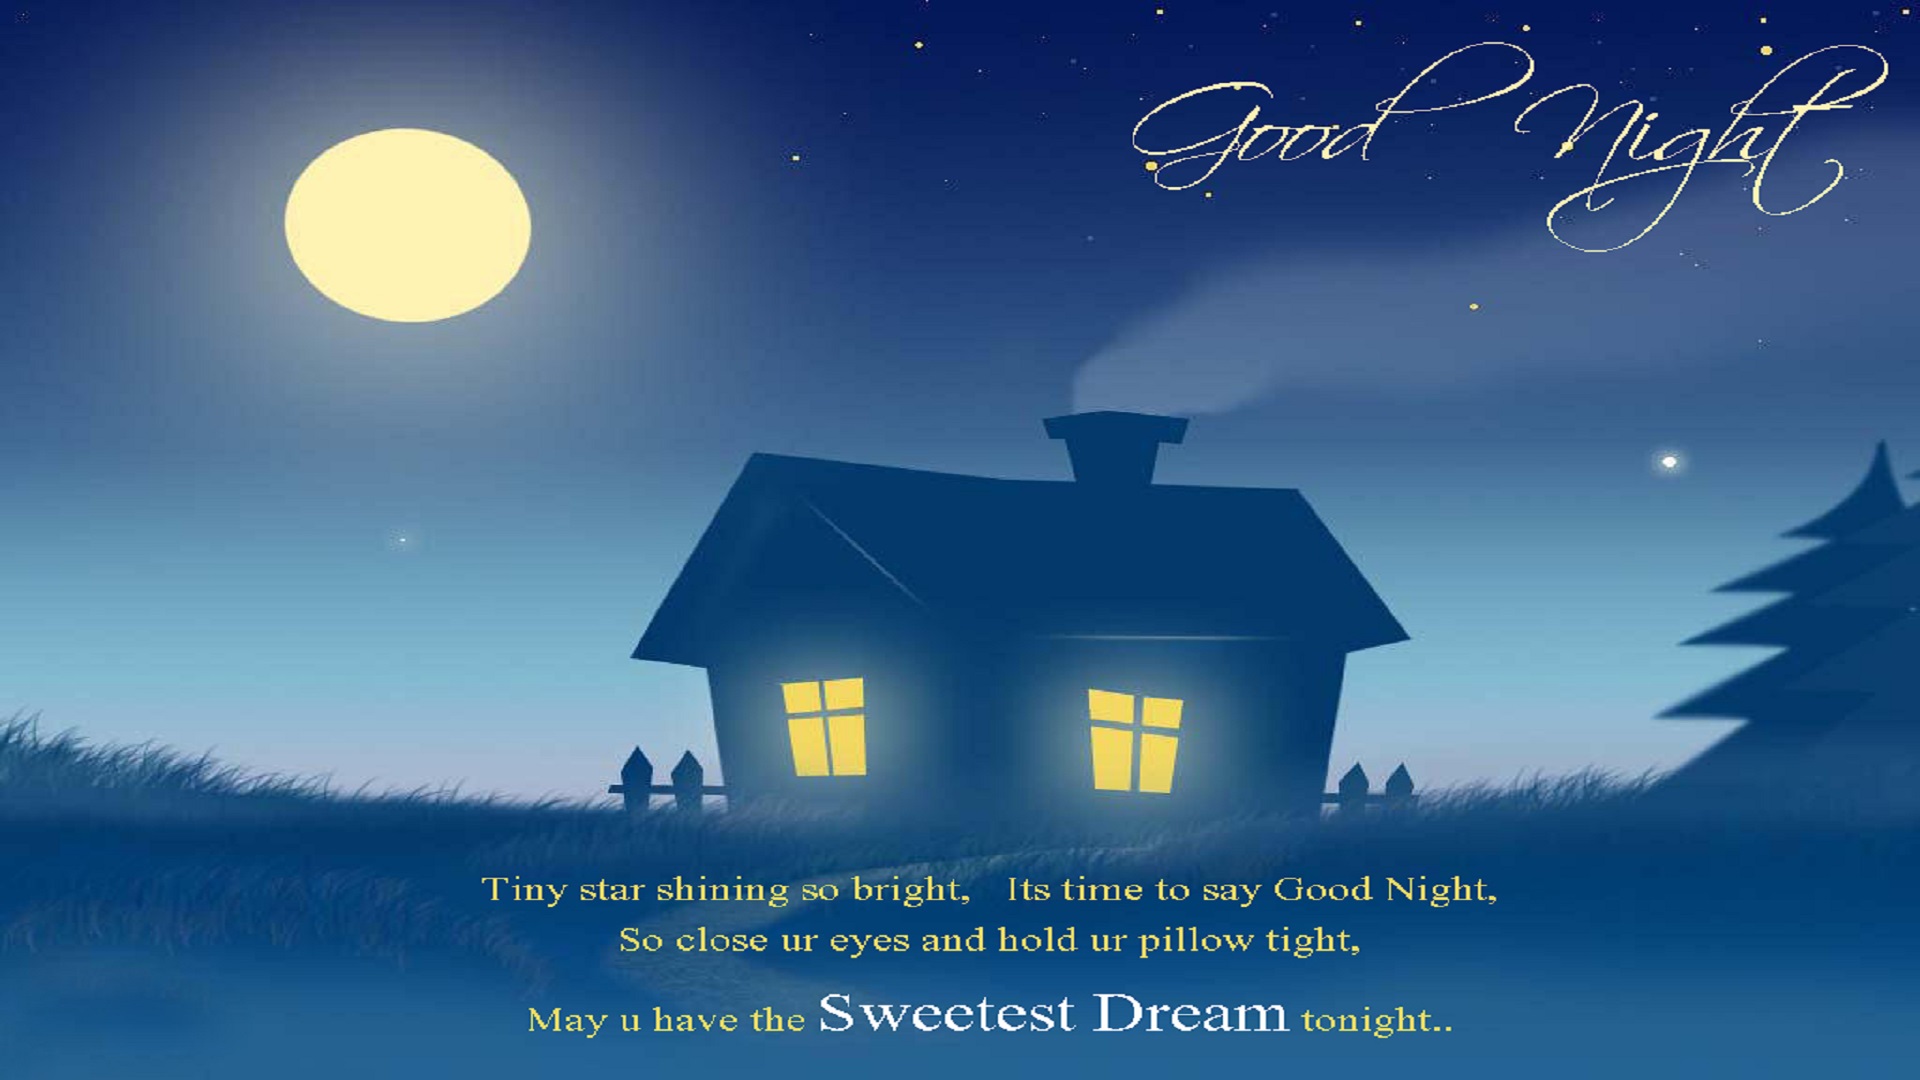 Hd wallpapers free best good night sweet dreams